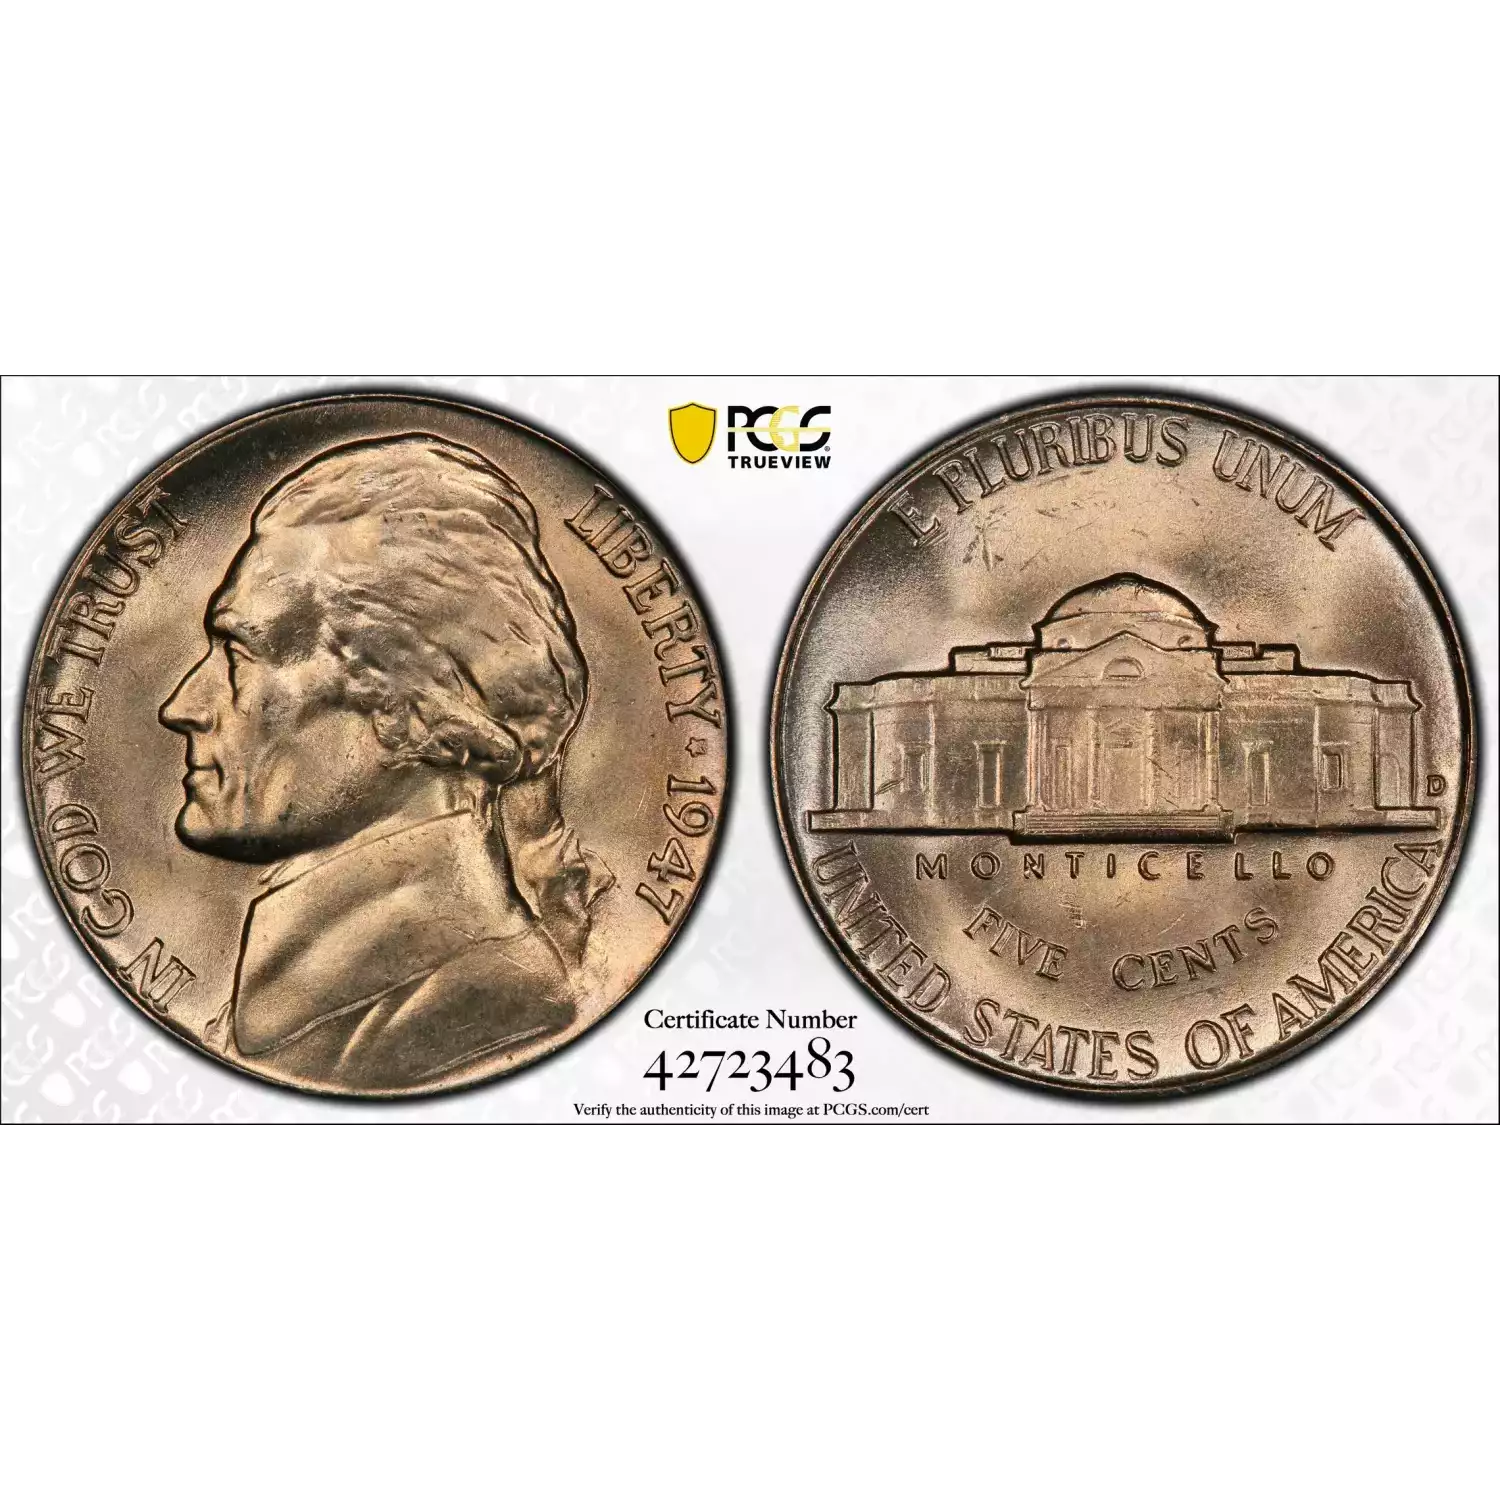 Nickel Five Cent Pieces-Jefferson